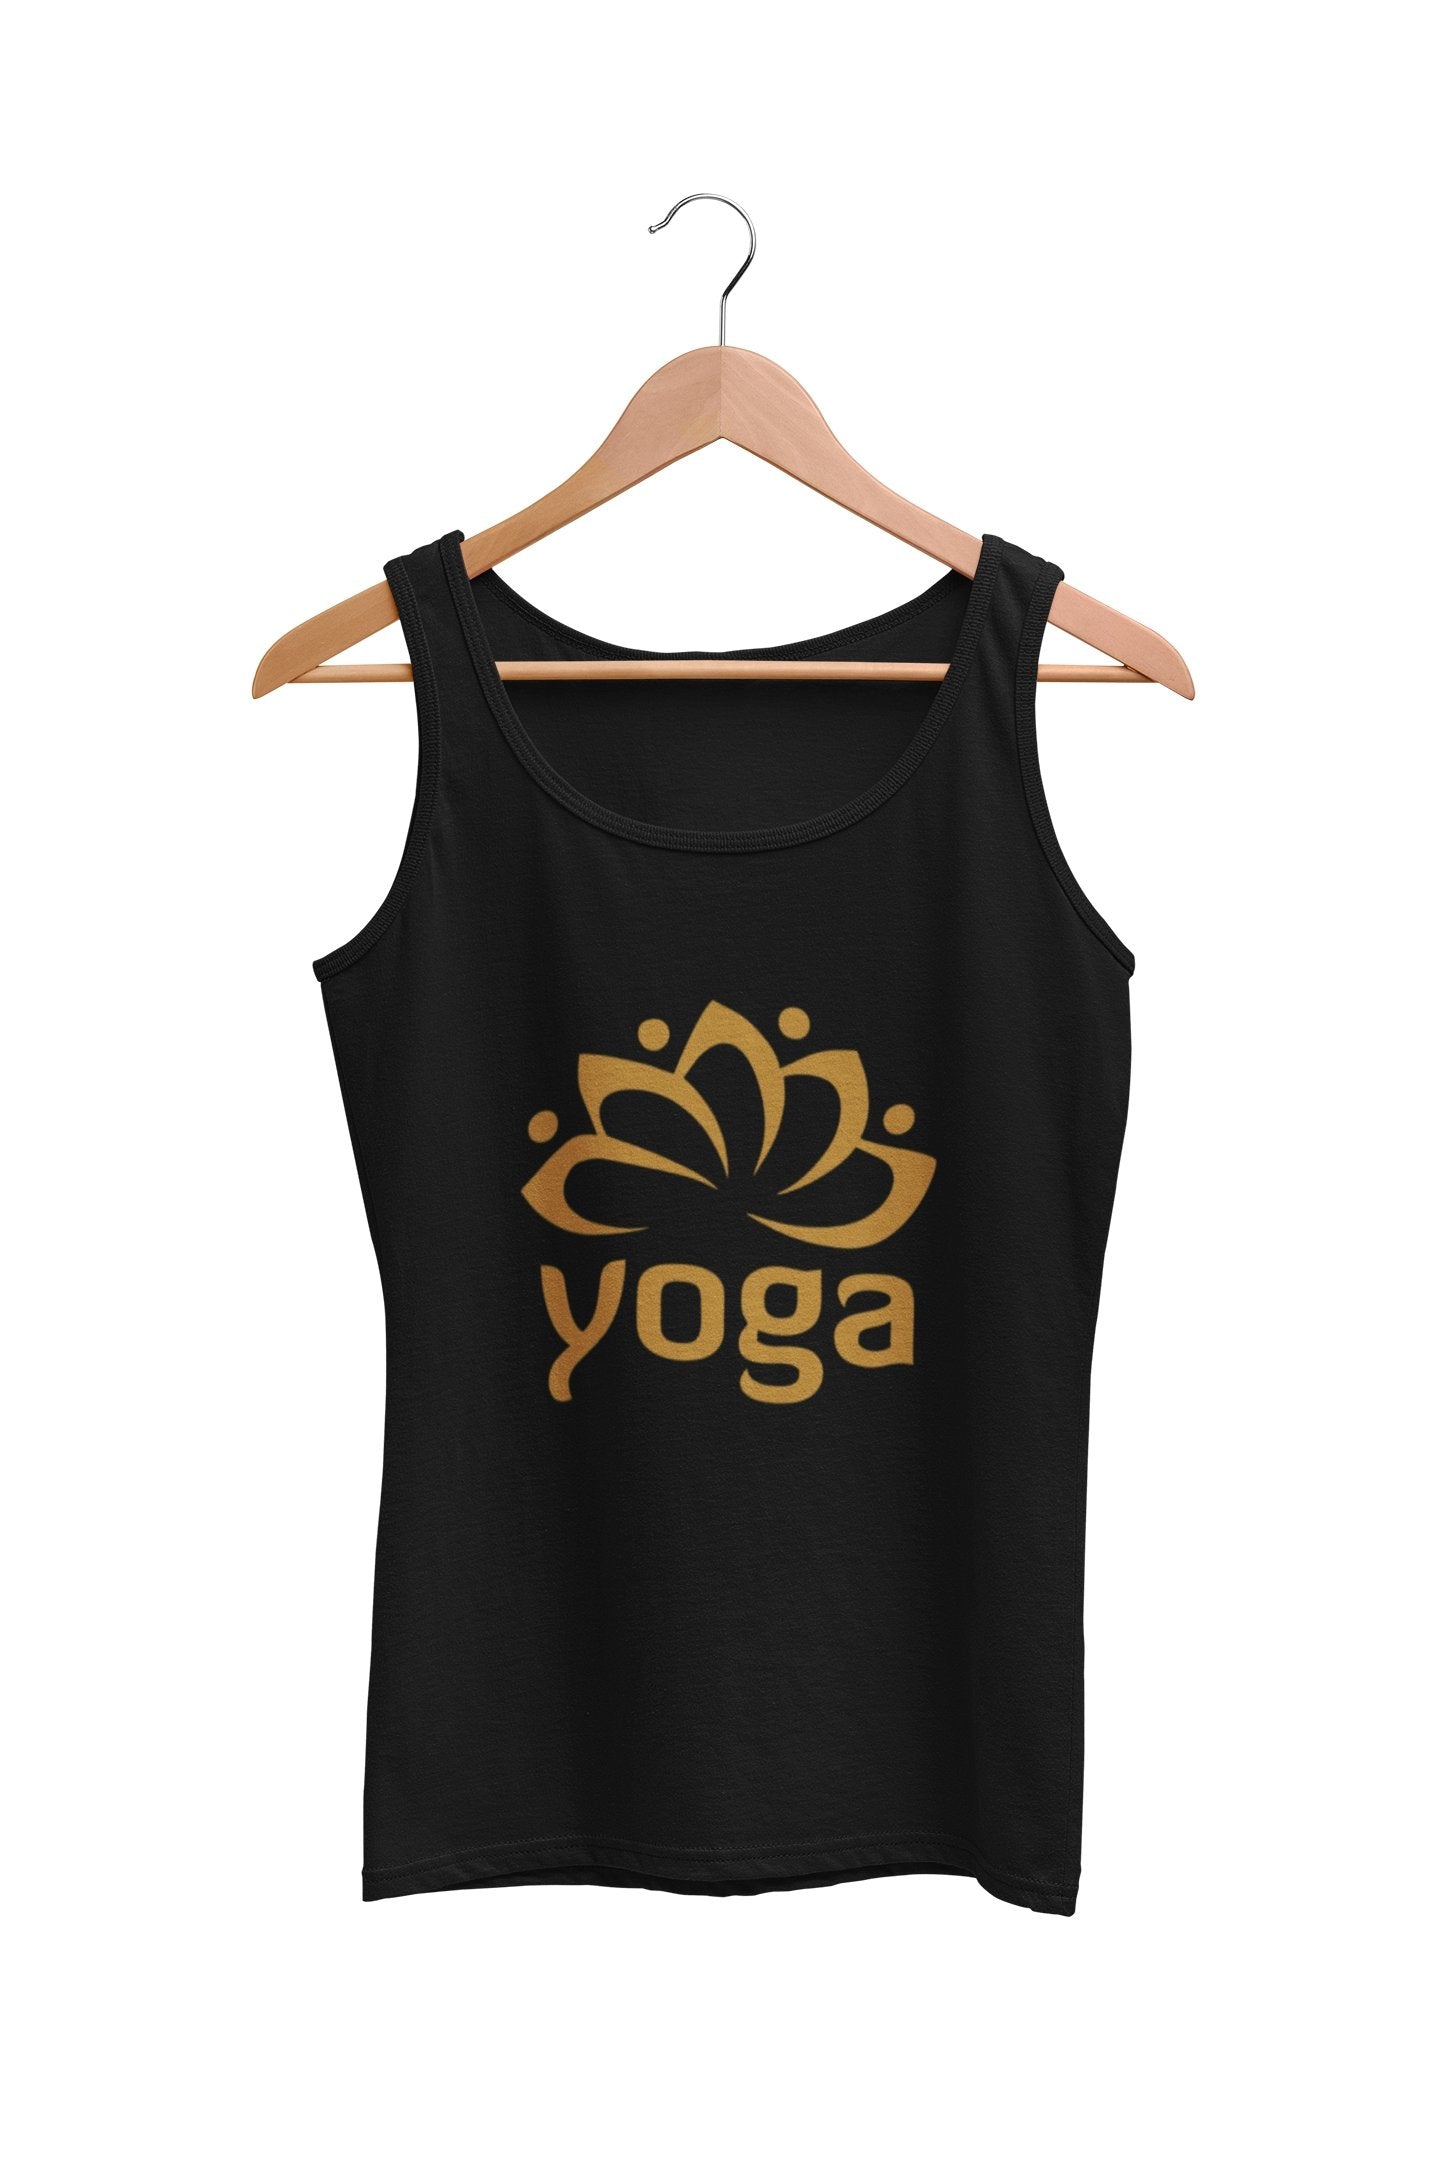 thelegalgang,Yoga Golden Graphic Printed Tank Top,TANK TOP.